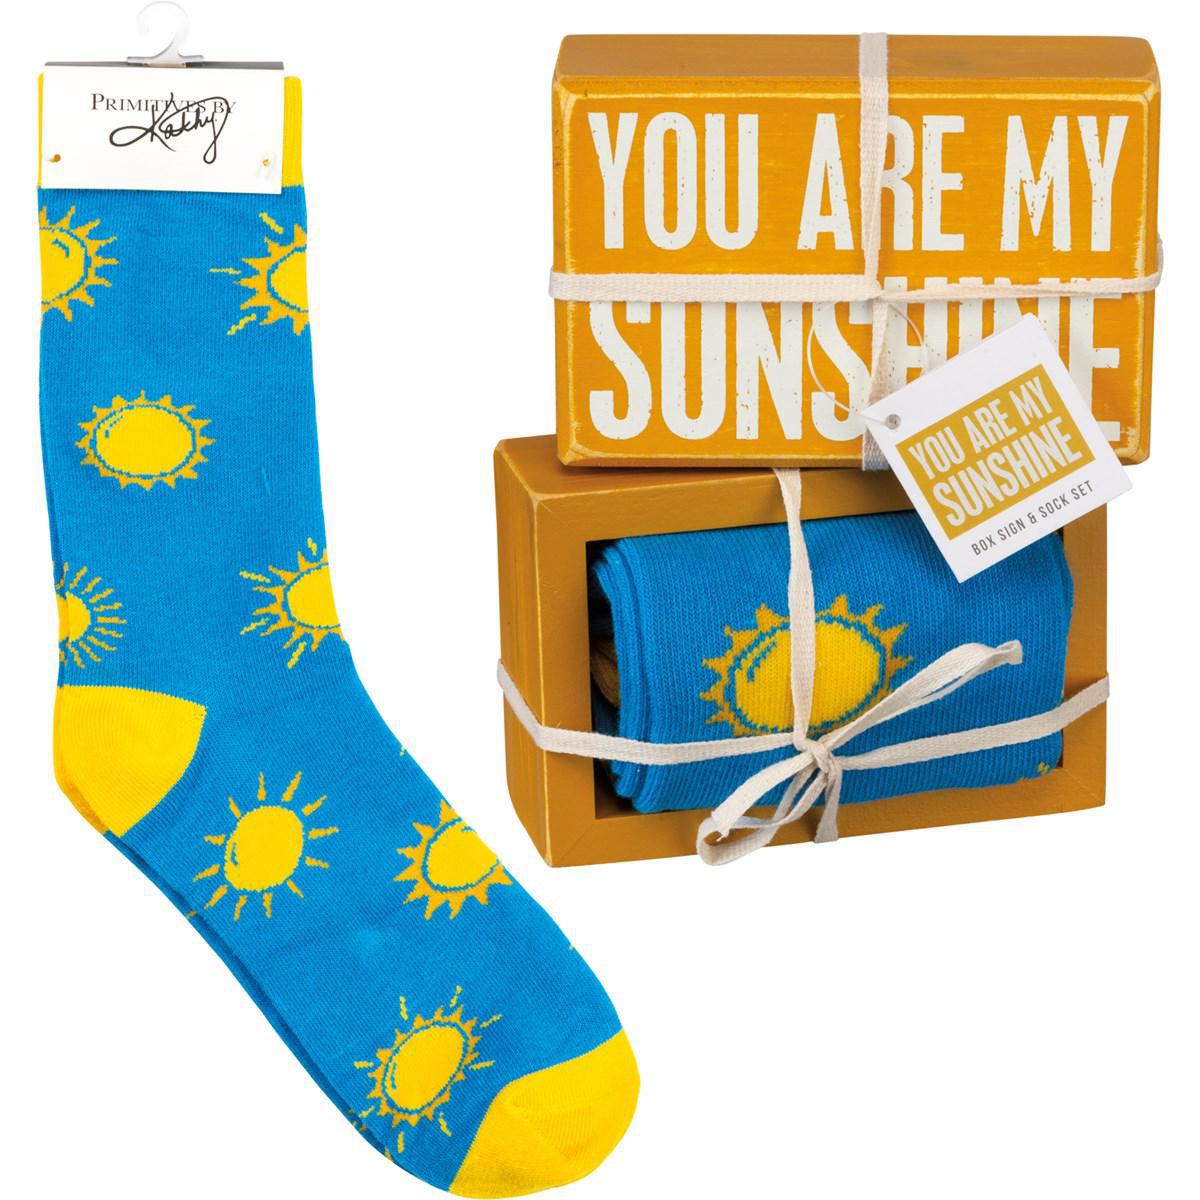 You Are My Sunshine Socks & Sign